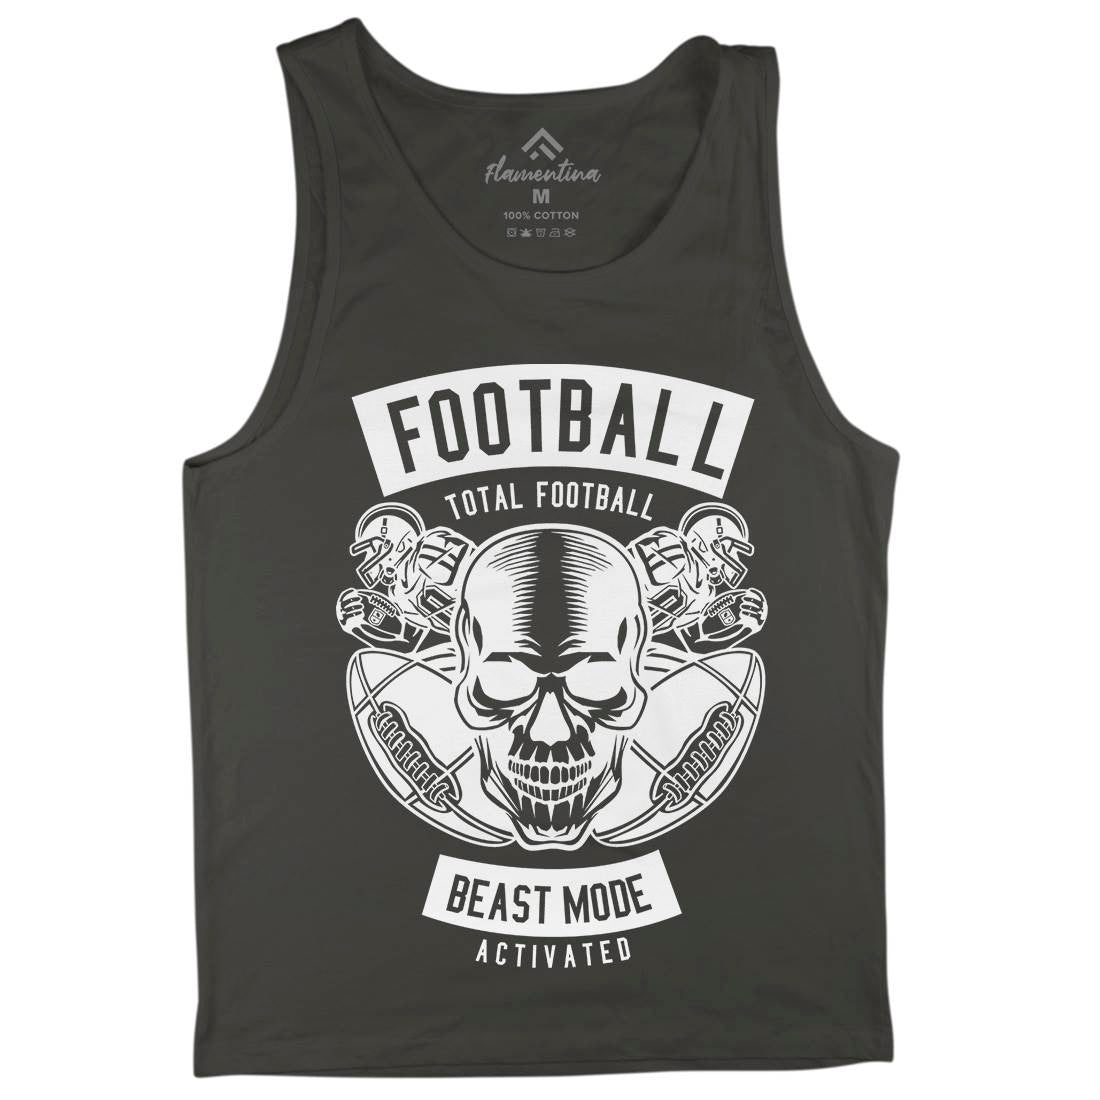 Total Football Mens Tank Top Vest Sport B657